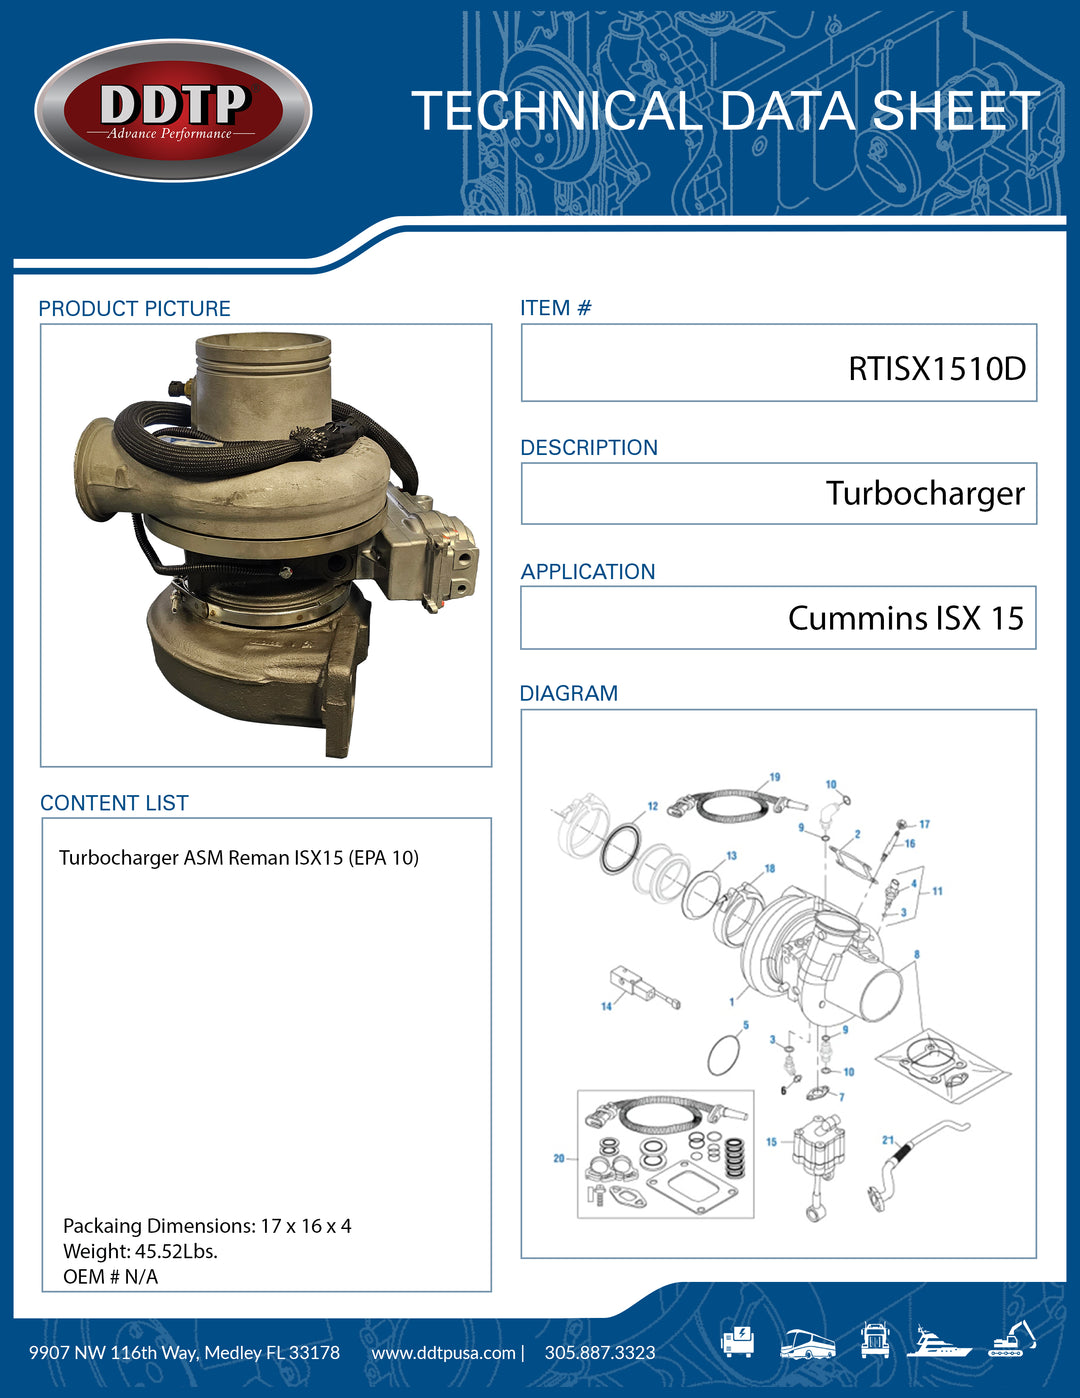 Turbocharger ASM Reman Cummins ISX15 (EPA 10) (RTISX1510)